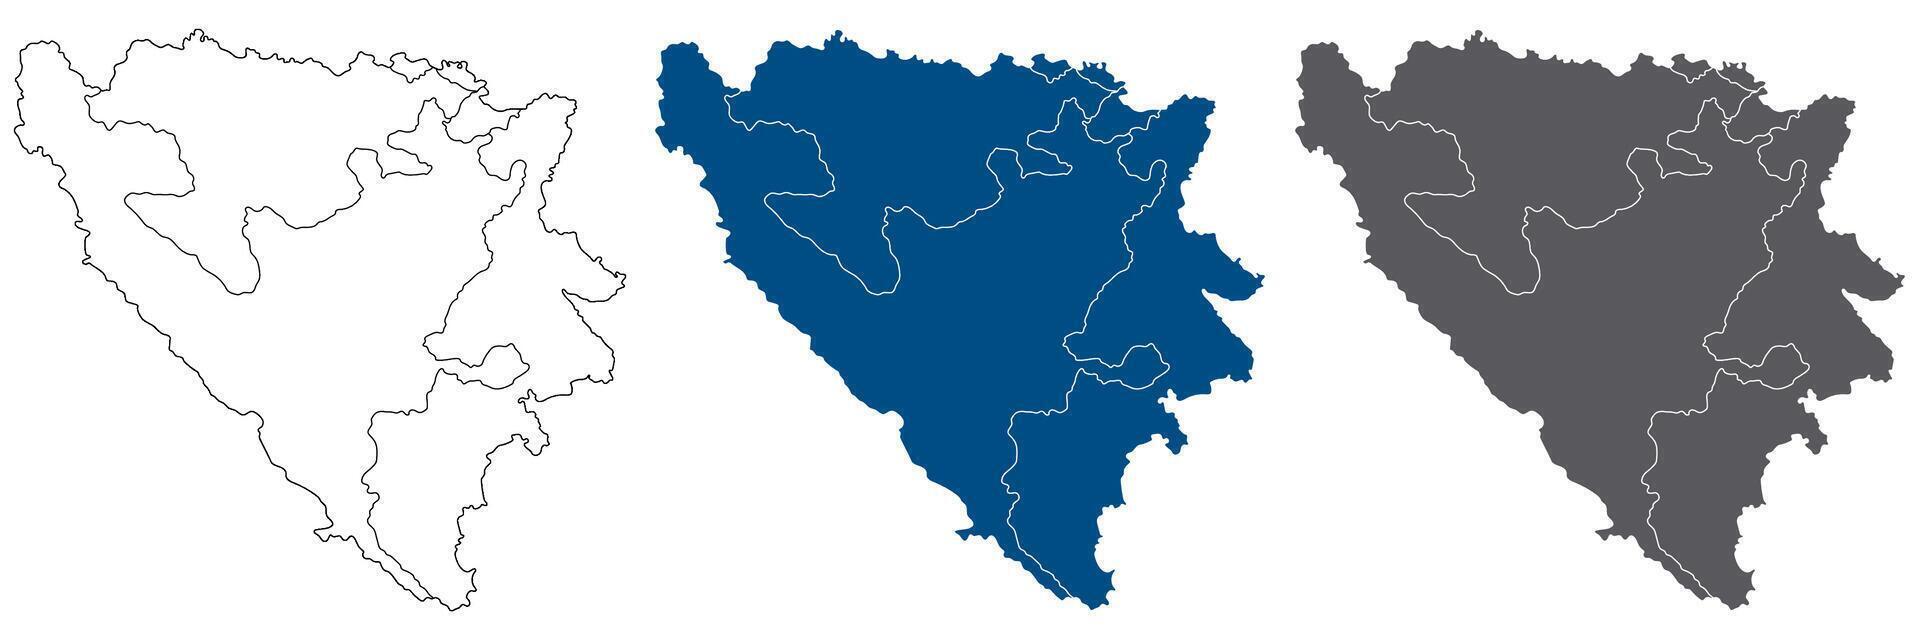 Bosnie et herzégovine carte. carte de Bosnie et herzégovine vecteur